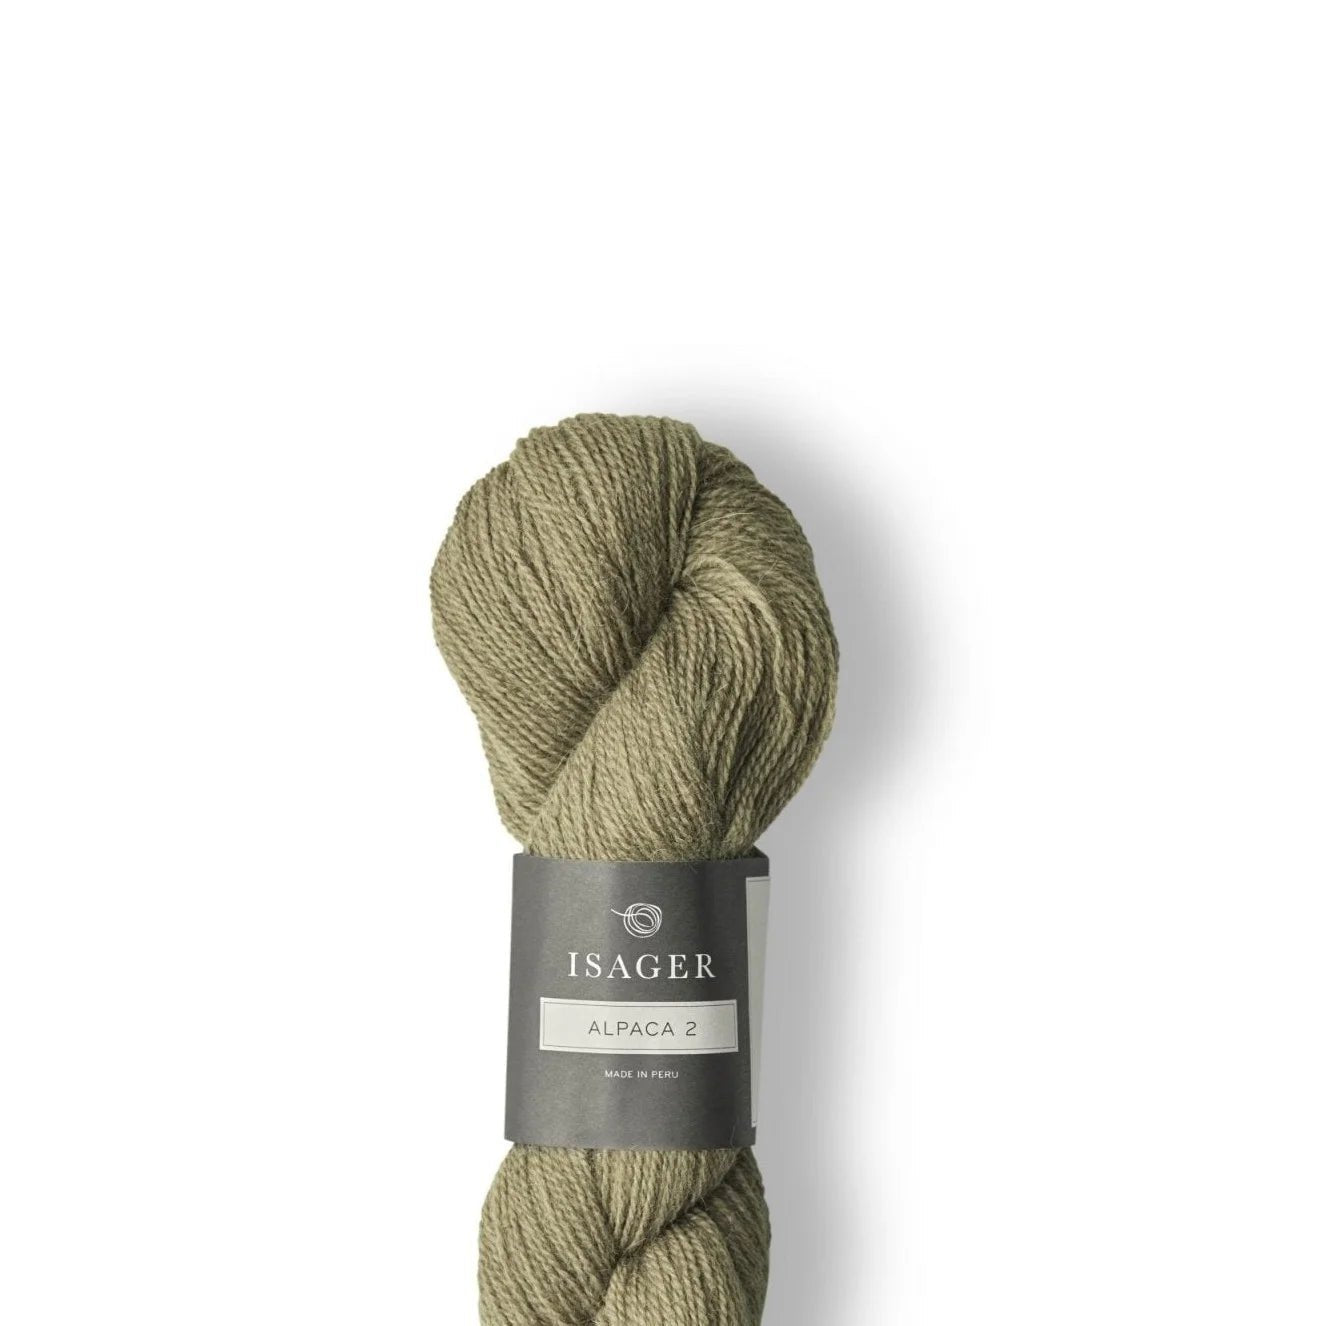 Isager Alpaca 2 - 23 - 4 Ply - Alpaca - The Little Yarn Store